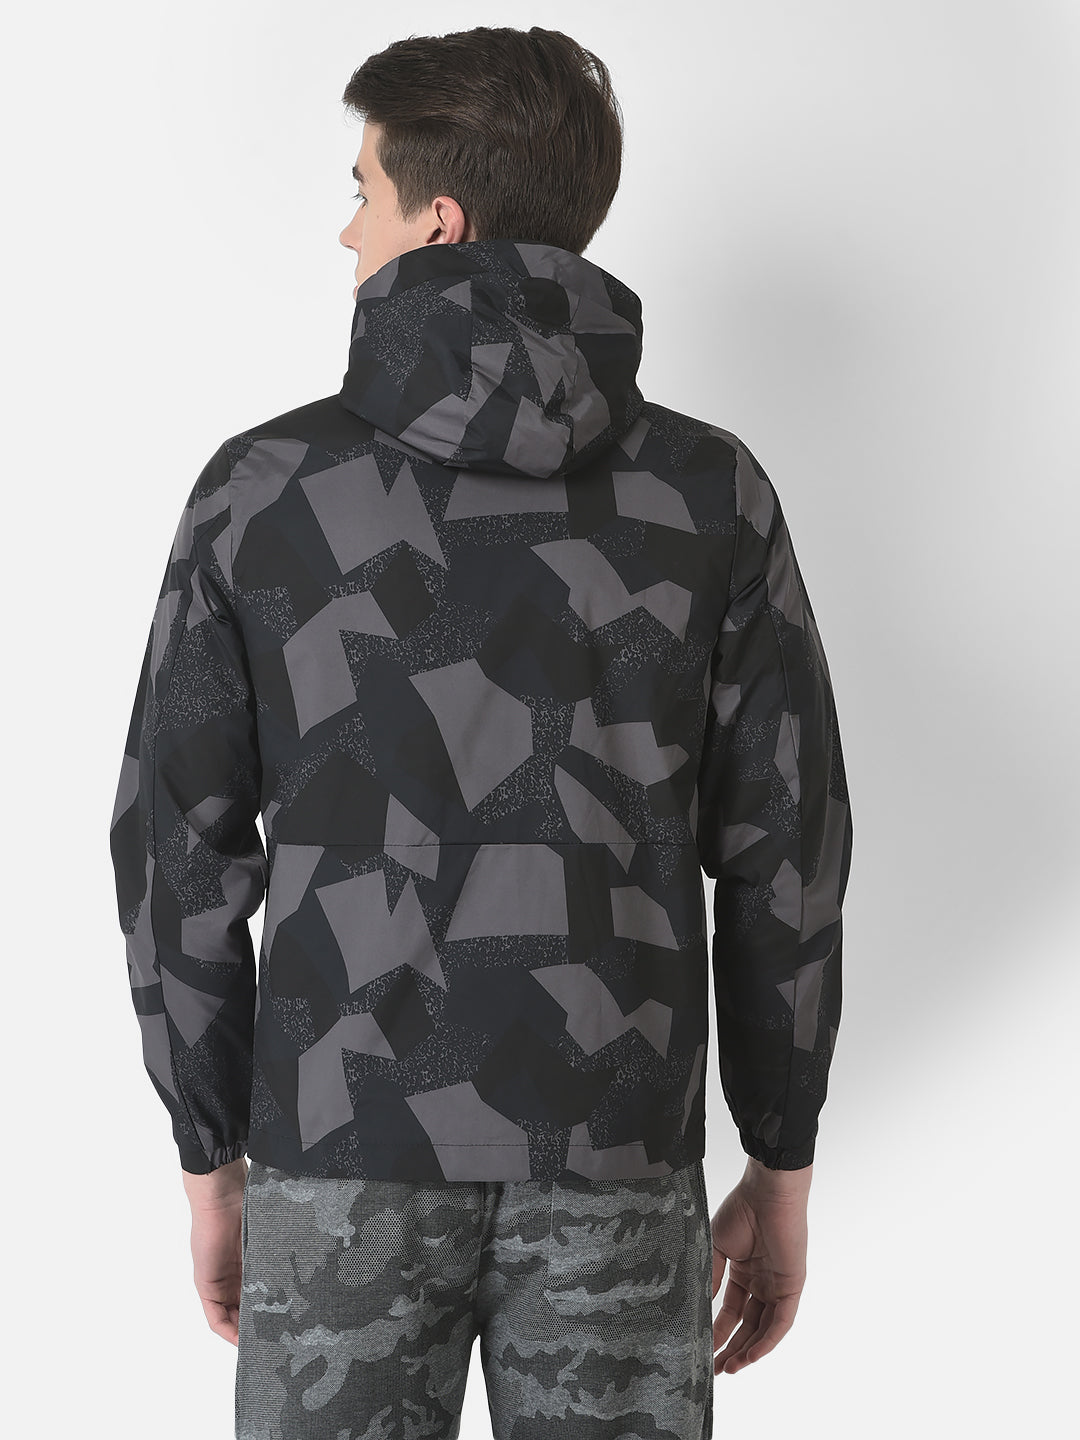  Black Abstract Print Jacket